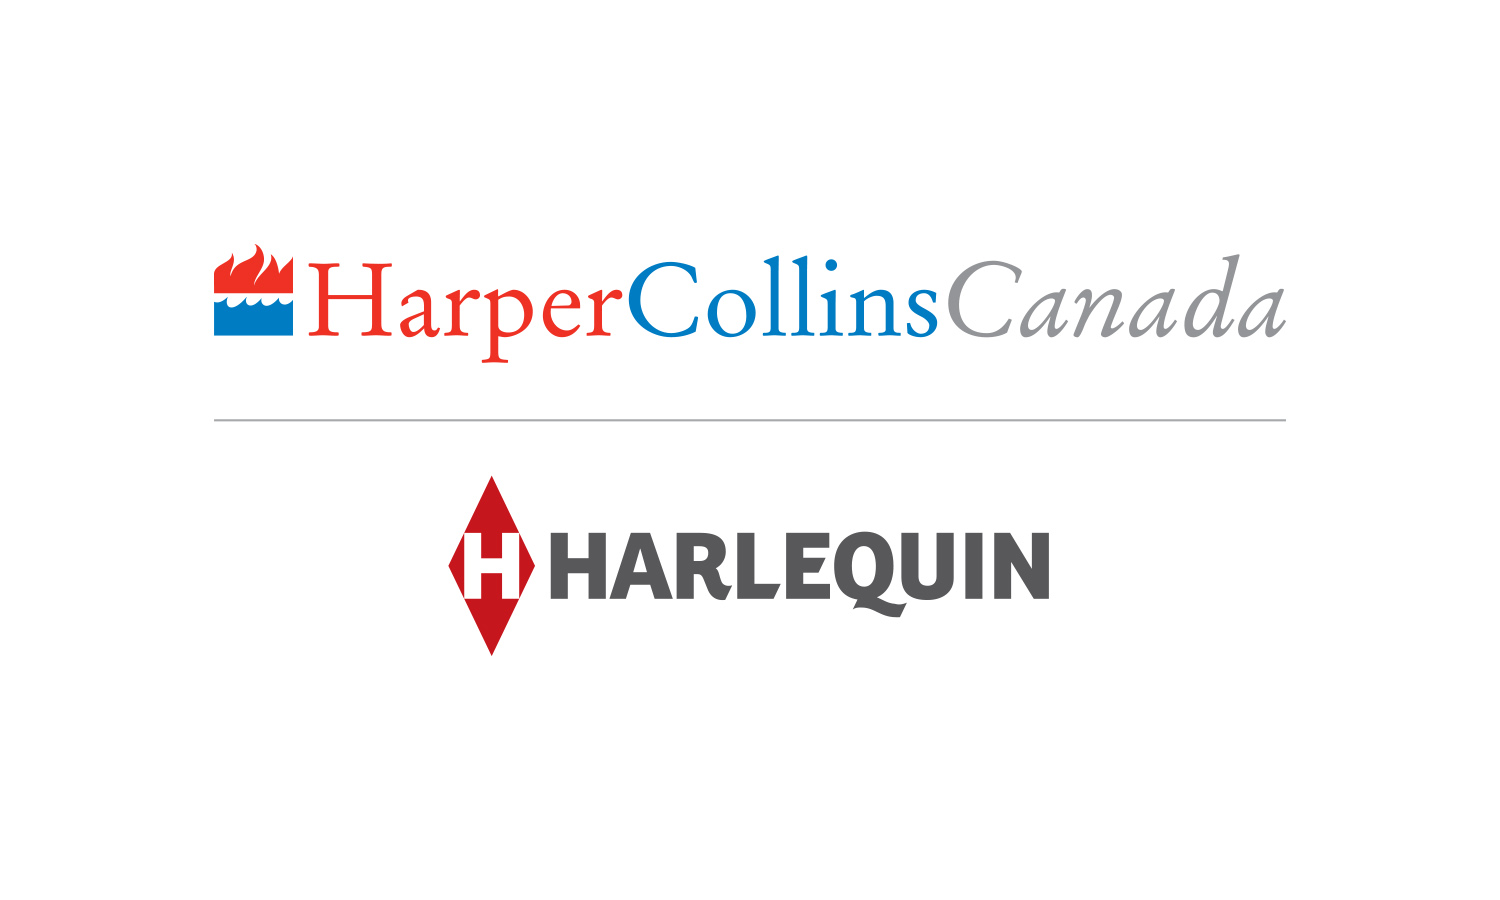 Logo Image for HarperCollins Canada